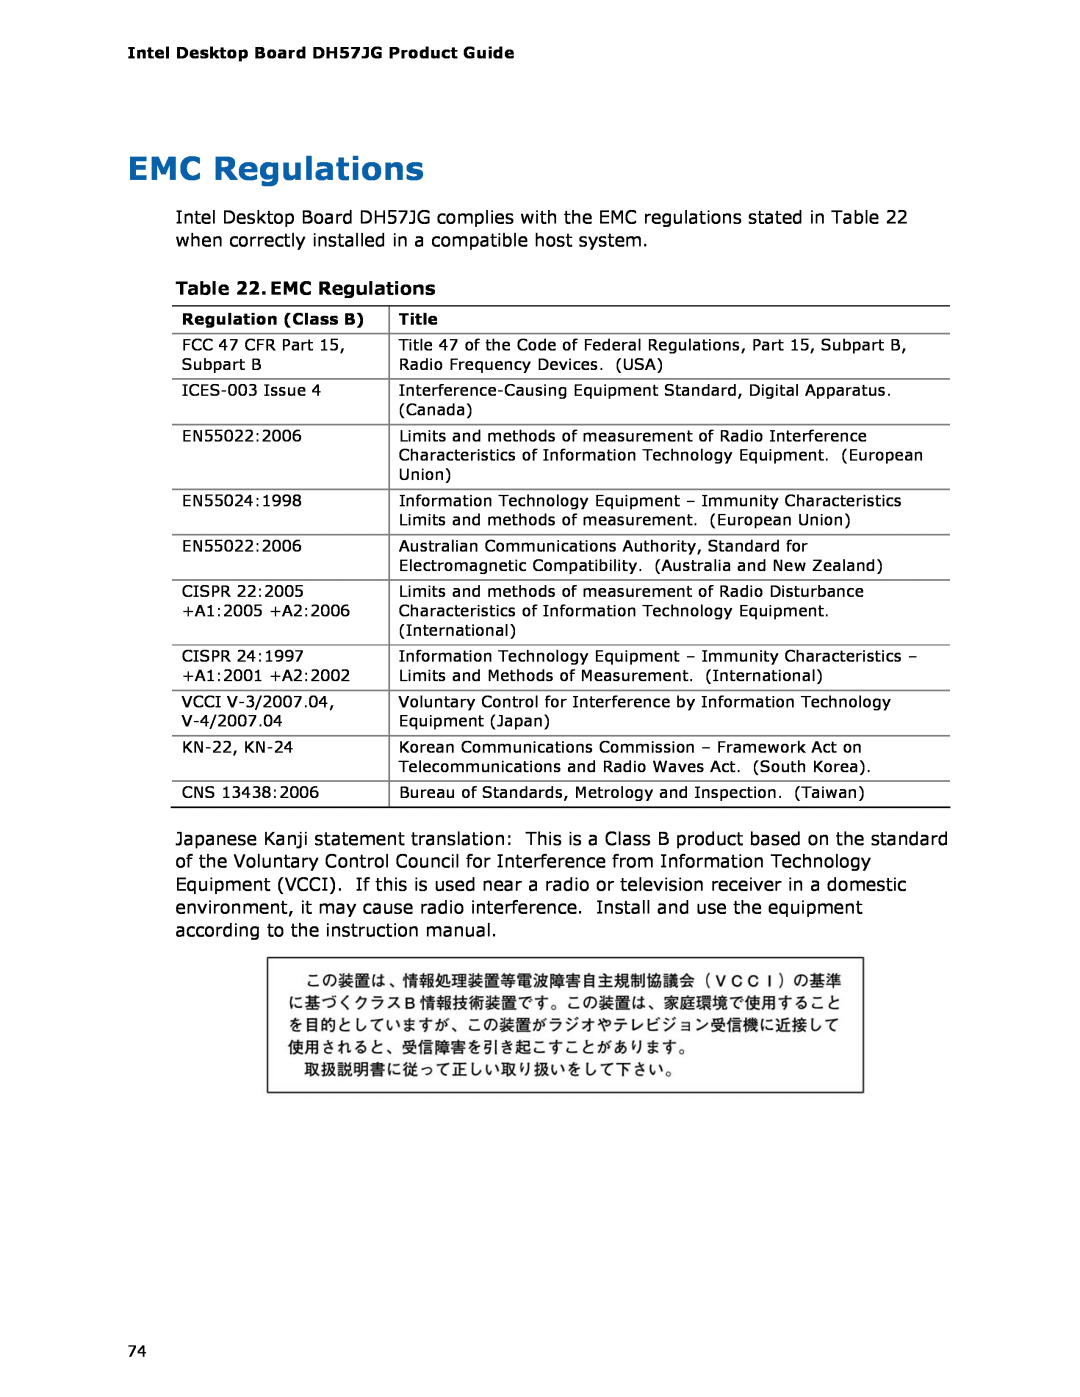 Intel BLKDH57JG manual EMC Regulations 